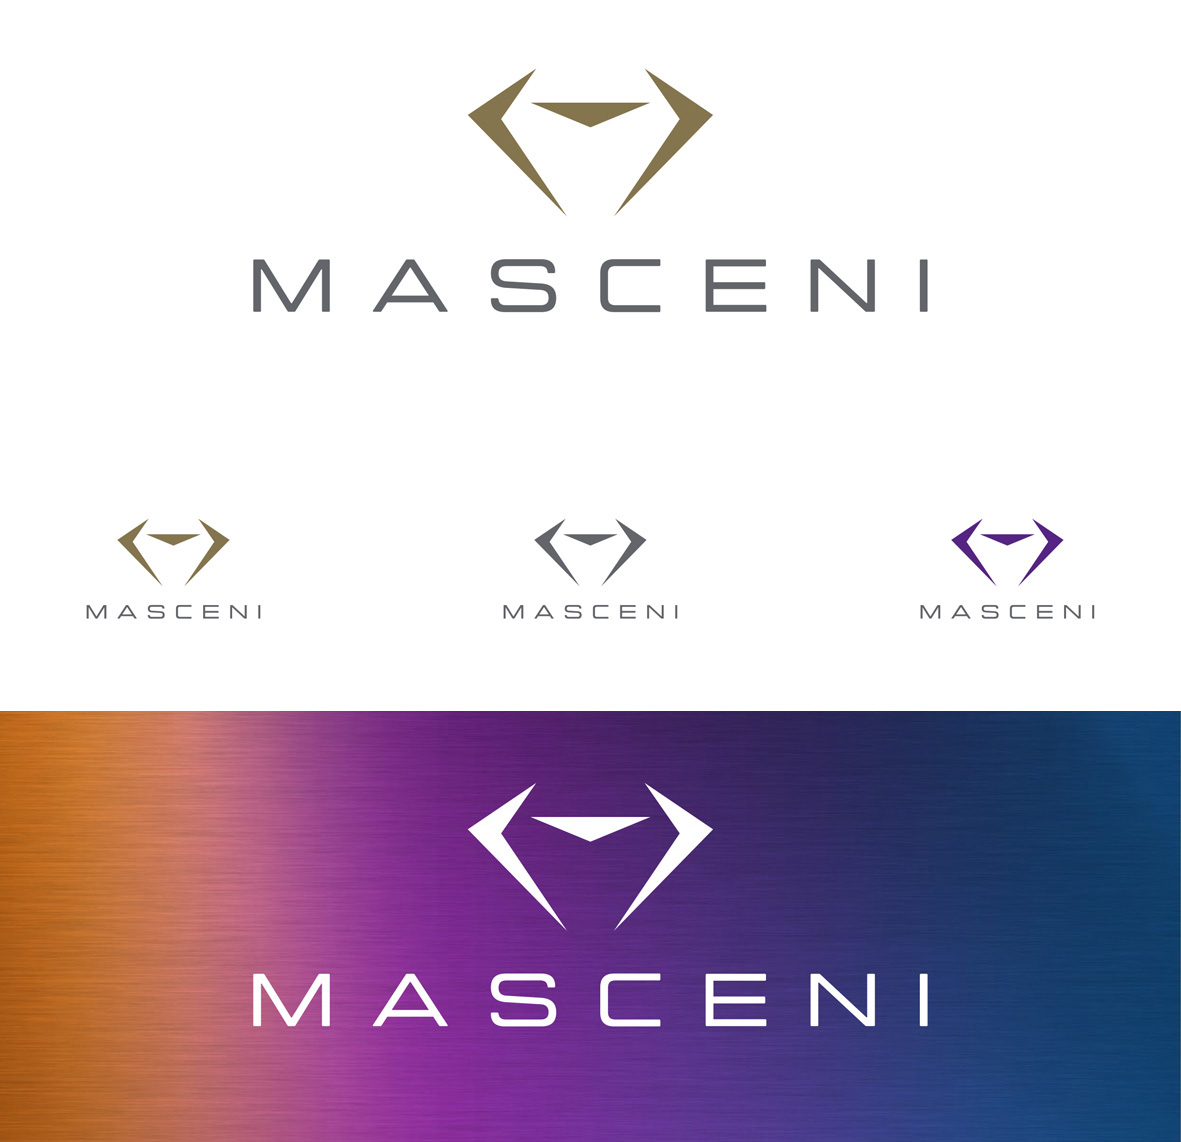 Masceni logo variations